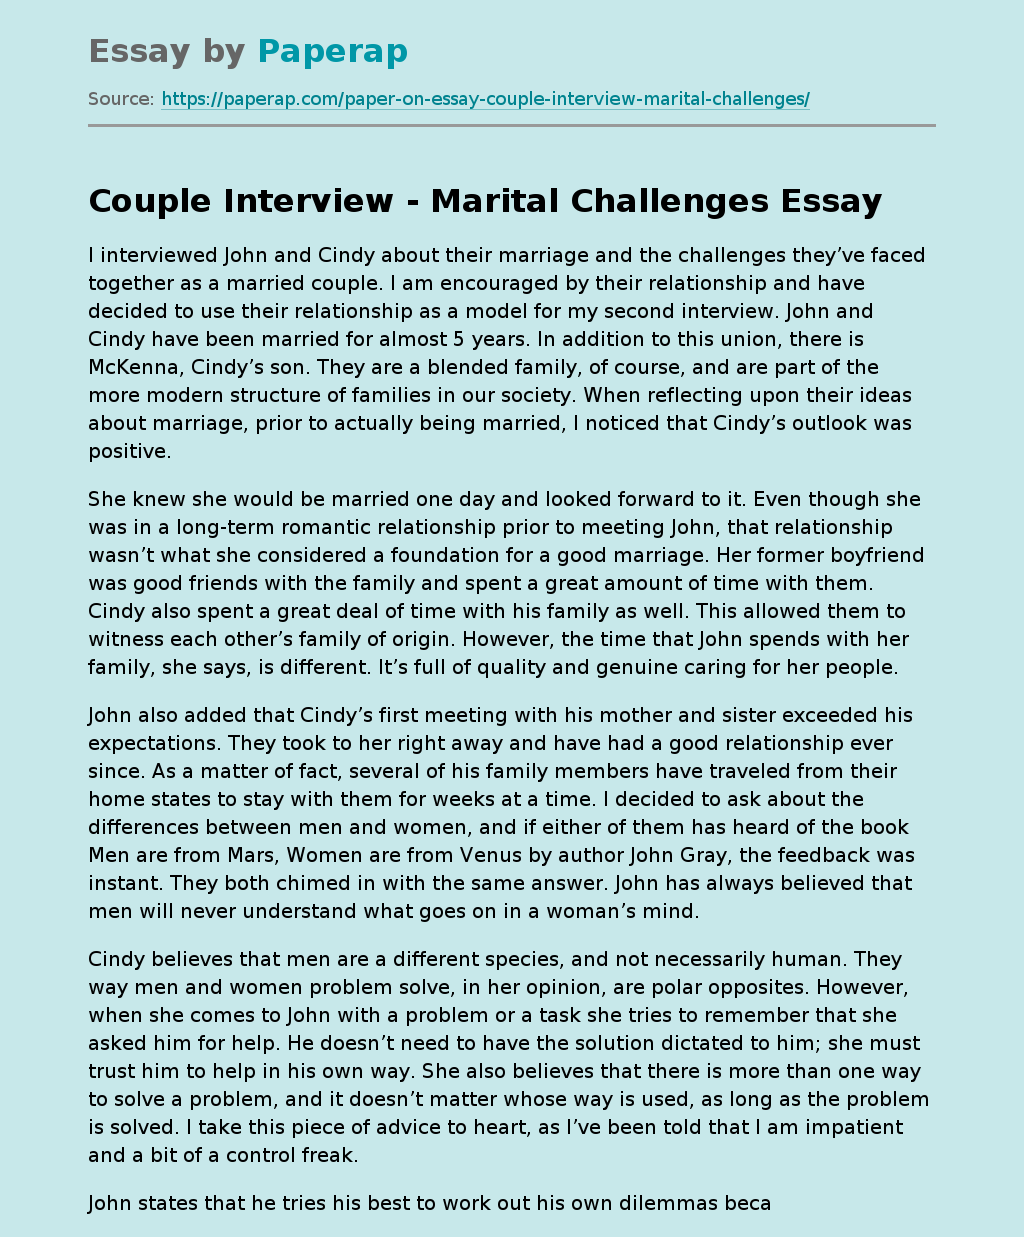 Couple Interview - Marital Challenges